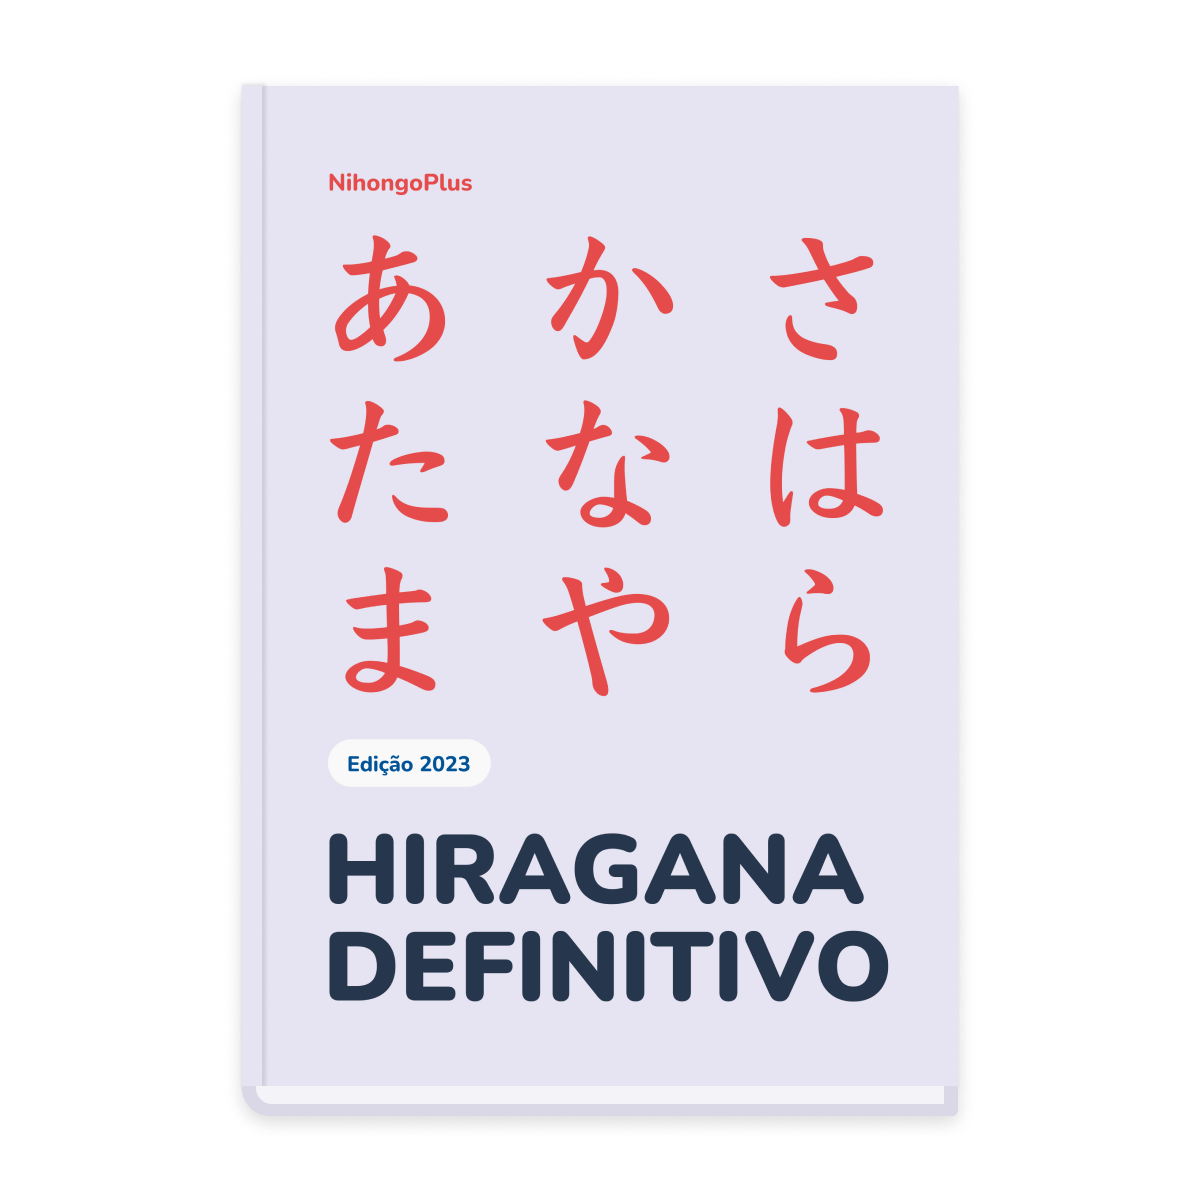 ebook de hiragana usado para aula de japonês